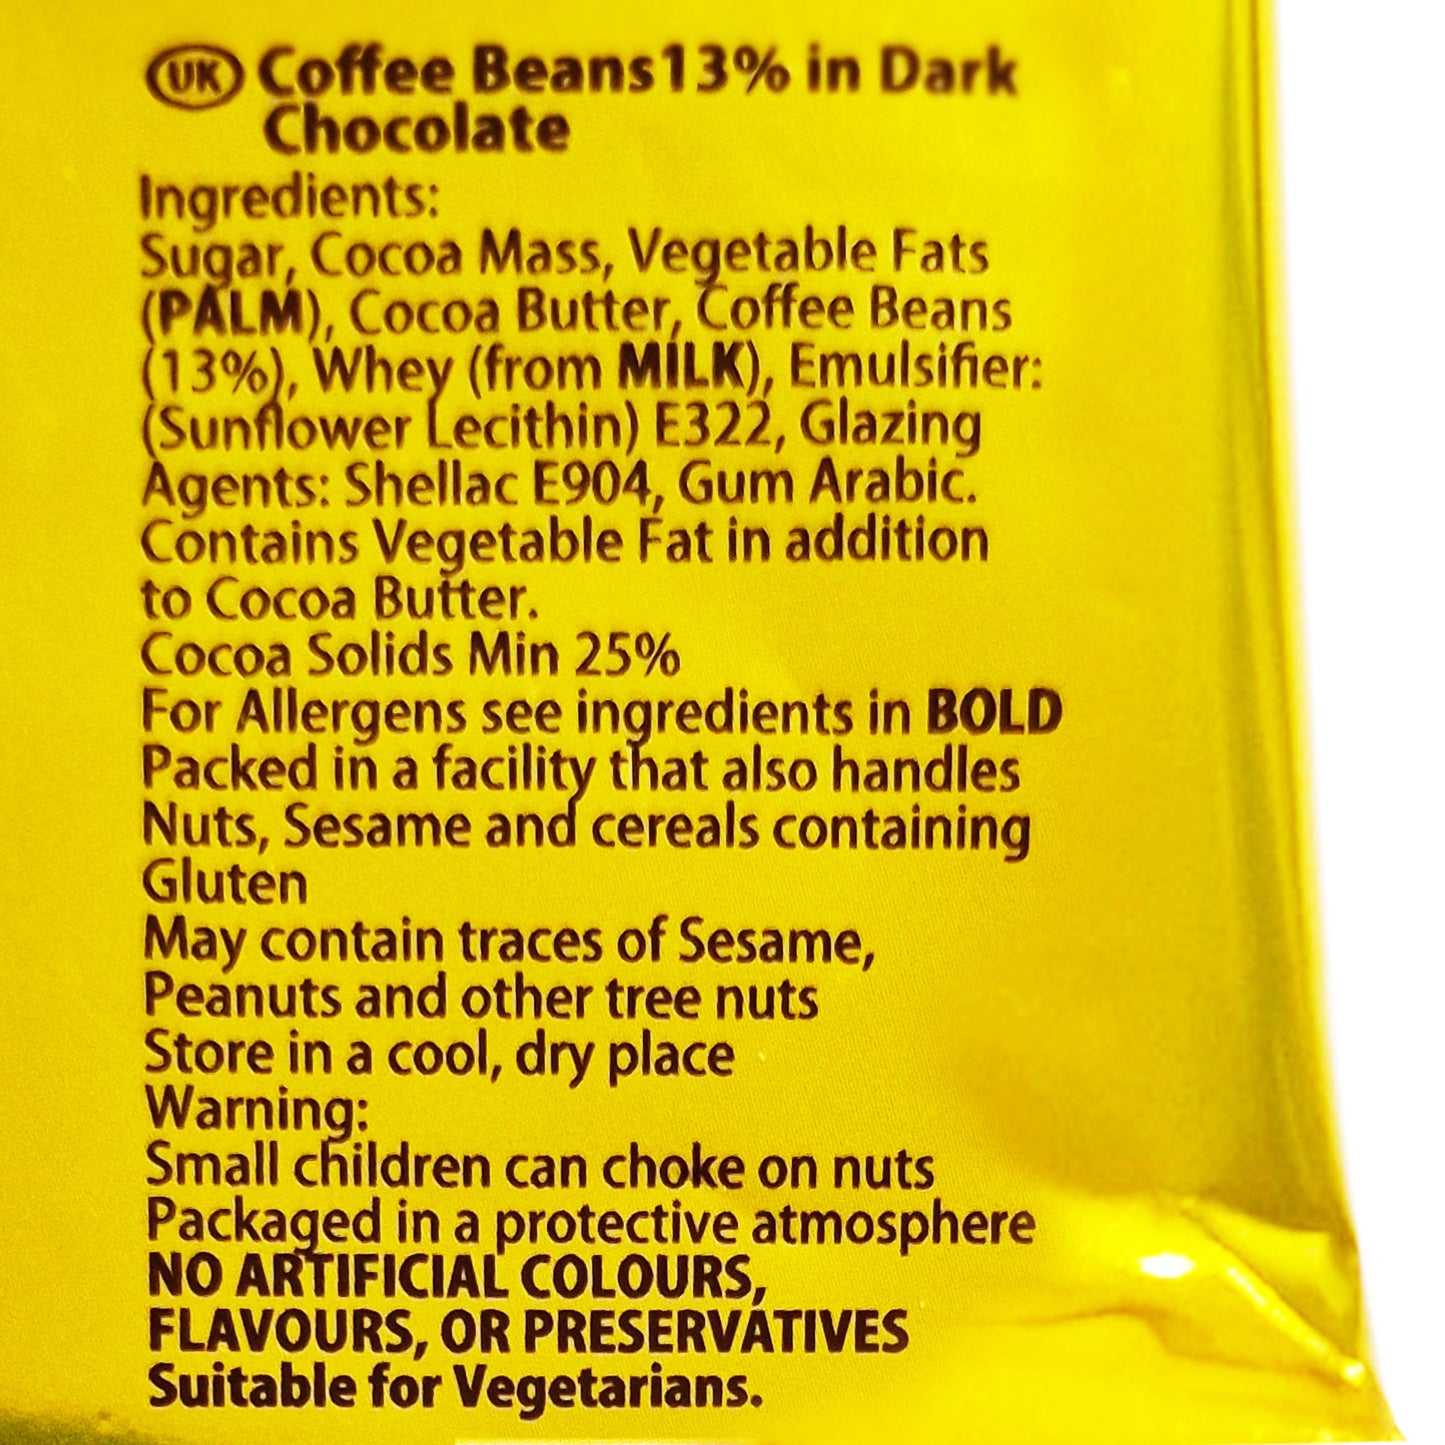 DC Americanos coffee beans in dark chocolate 12 x 63g case